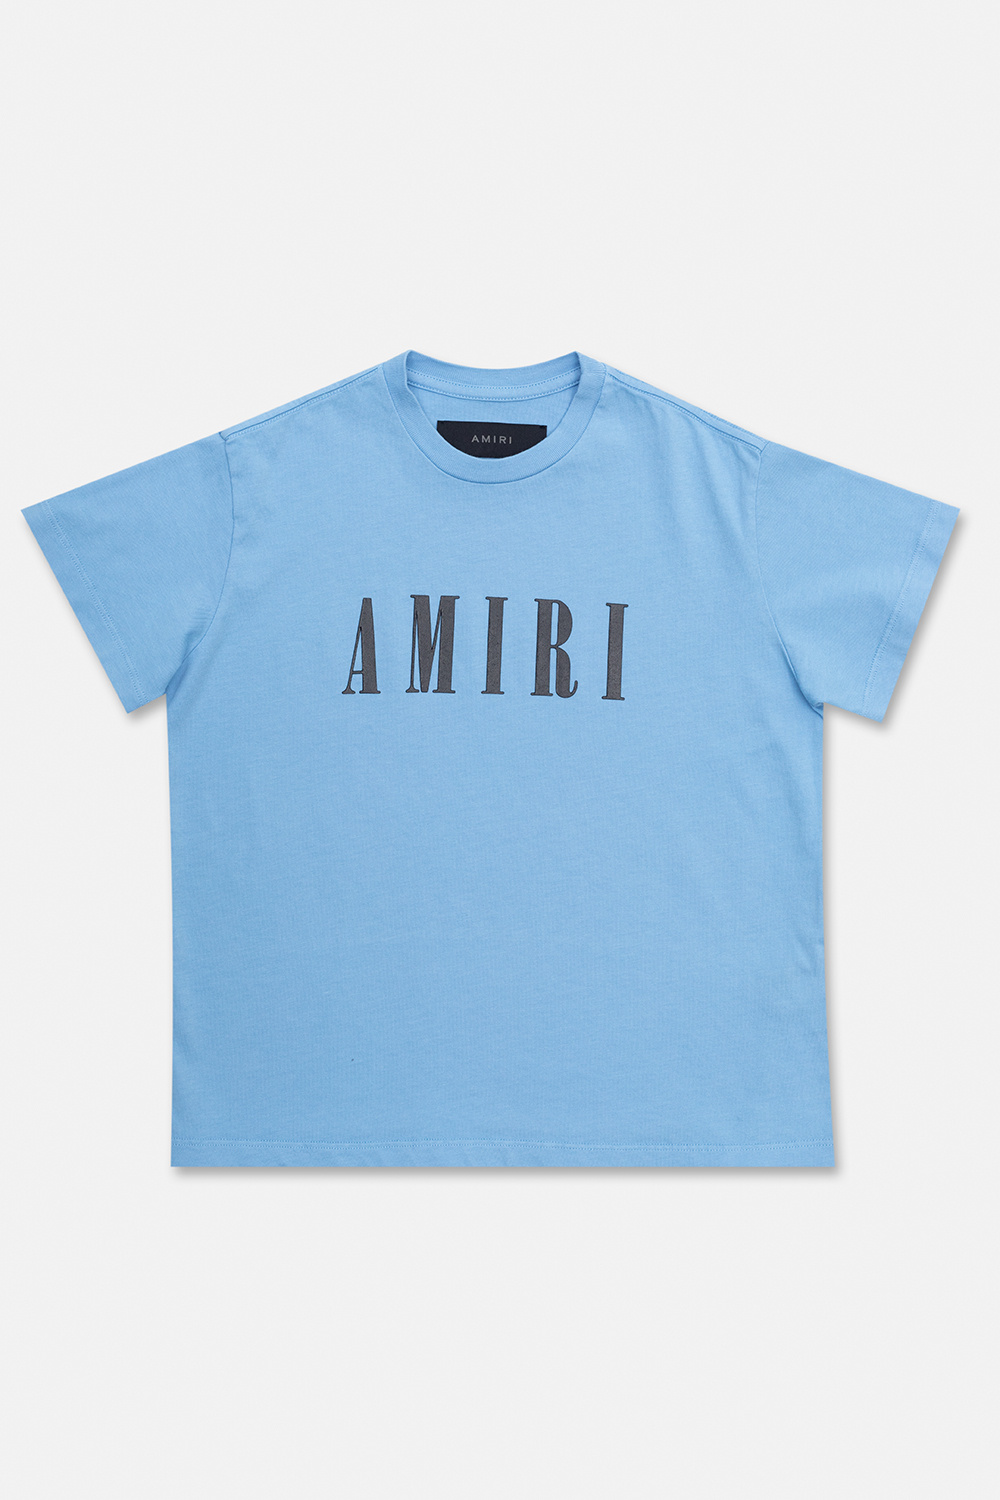 Amiri Kids clothing box office-accessories eyewear T Shirts Pink 44